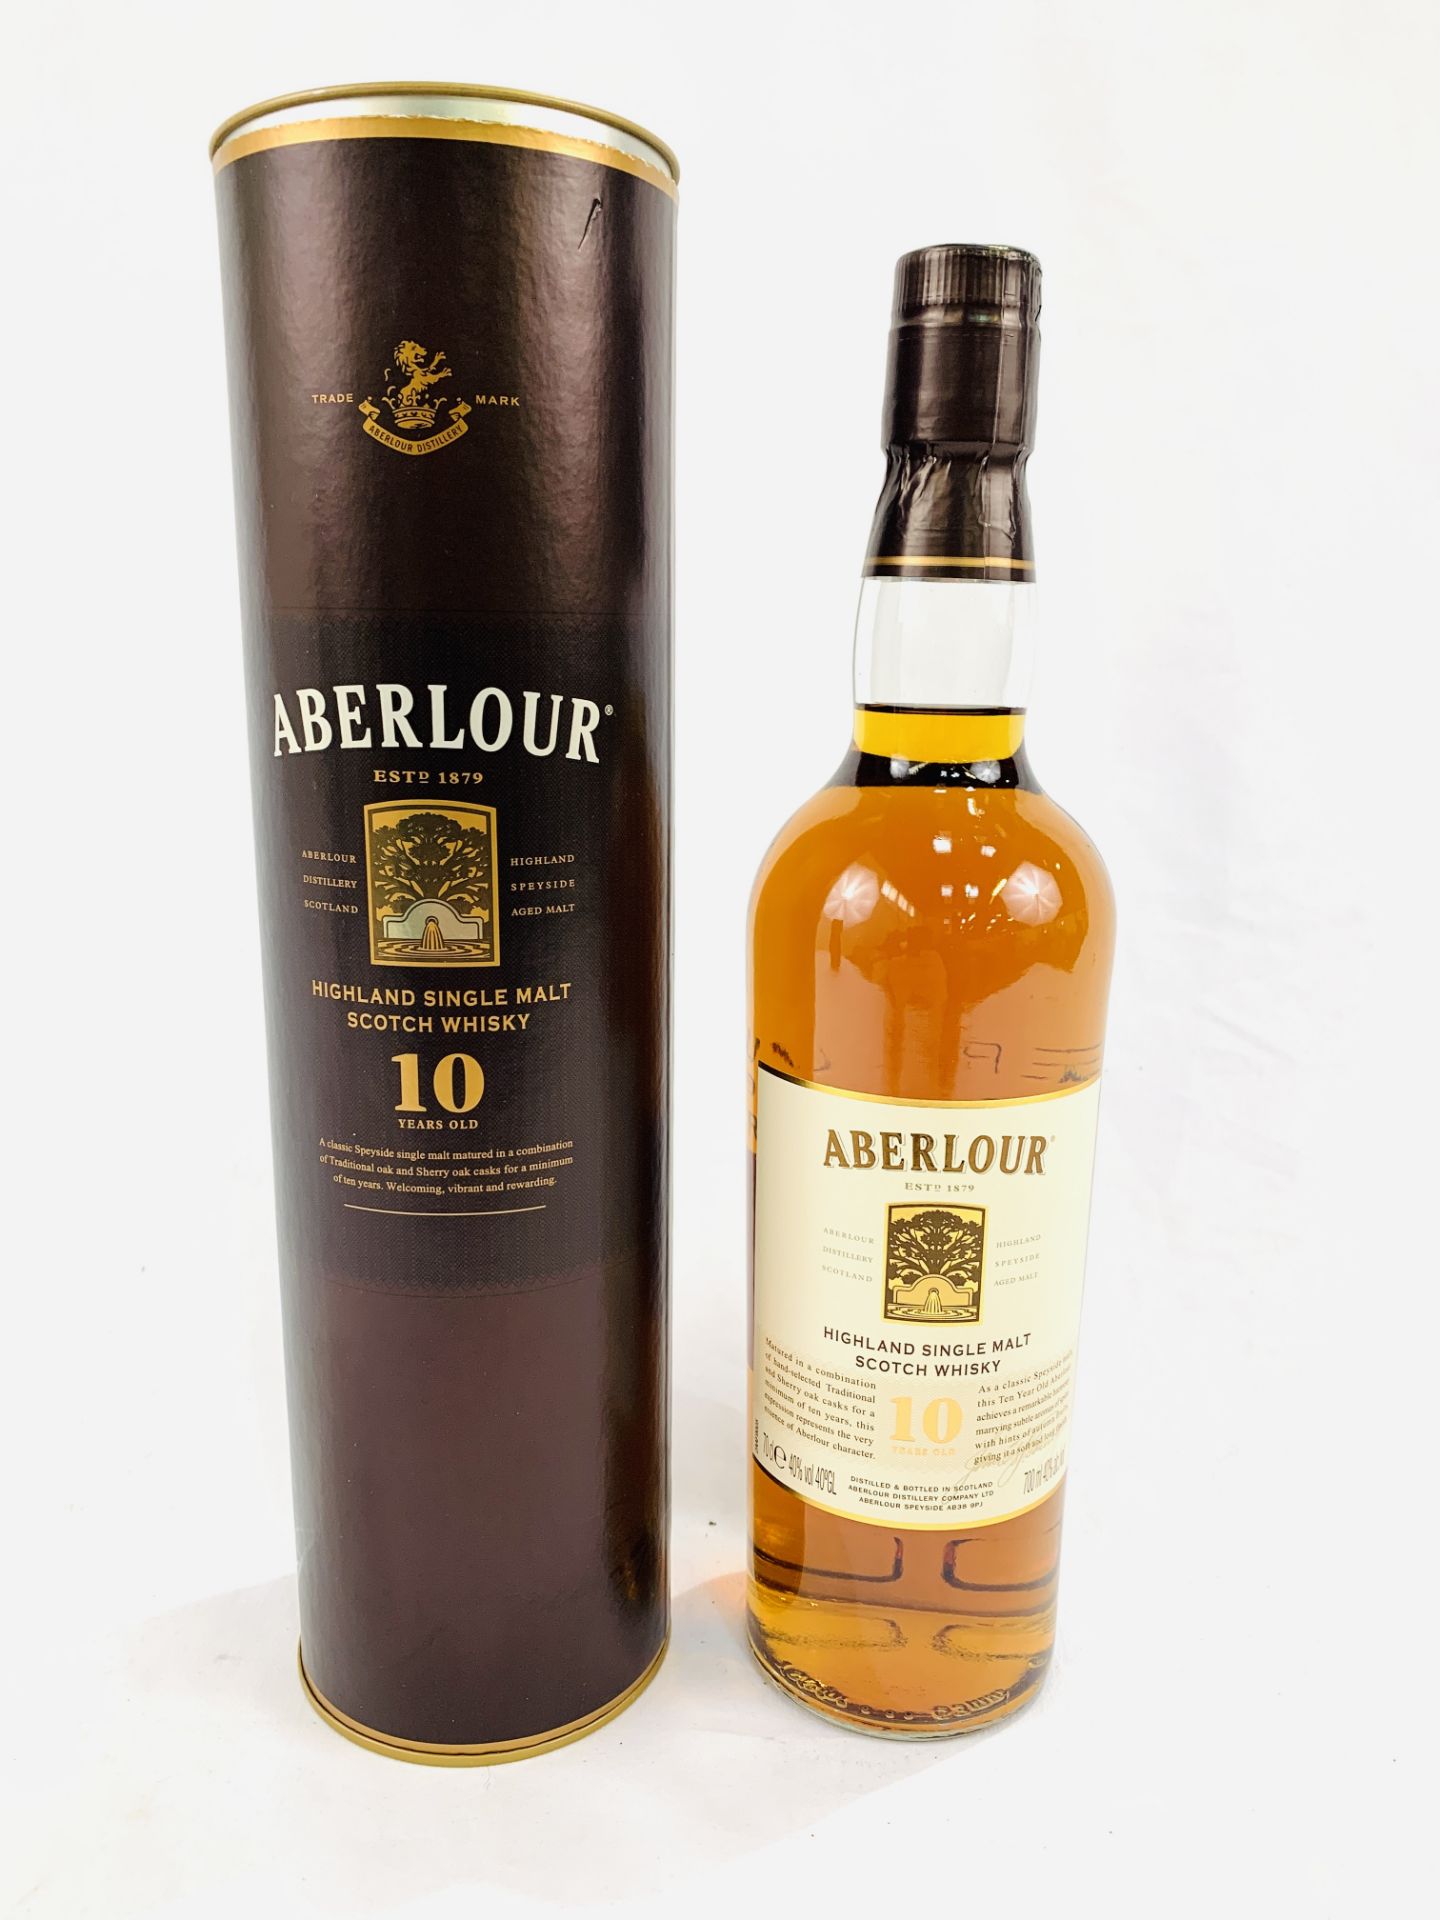 70cl bottle of Aberlour 10 year old single malt Scotch Whisky